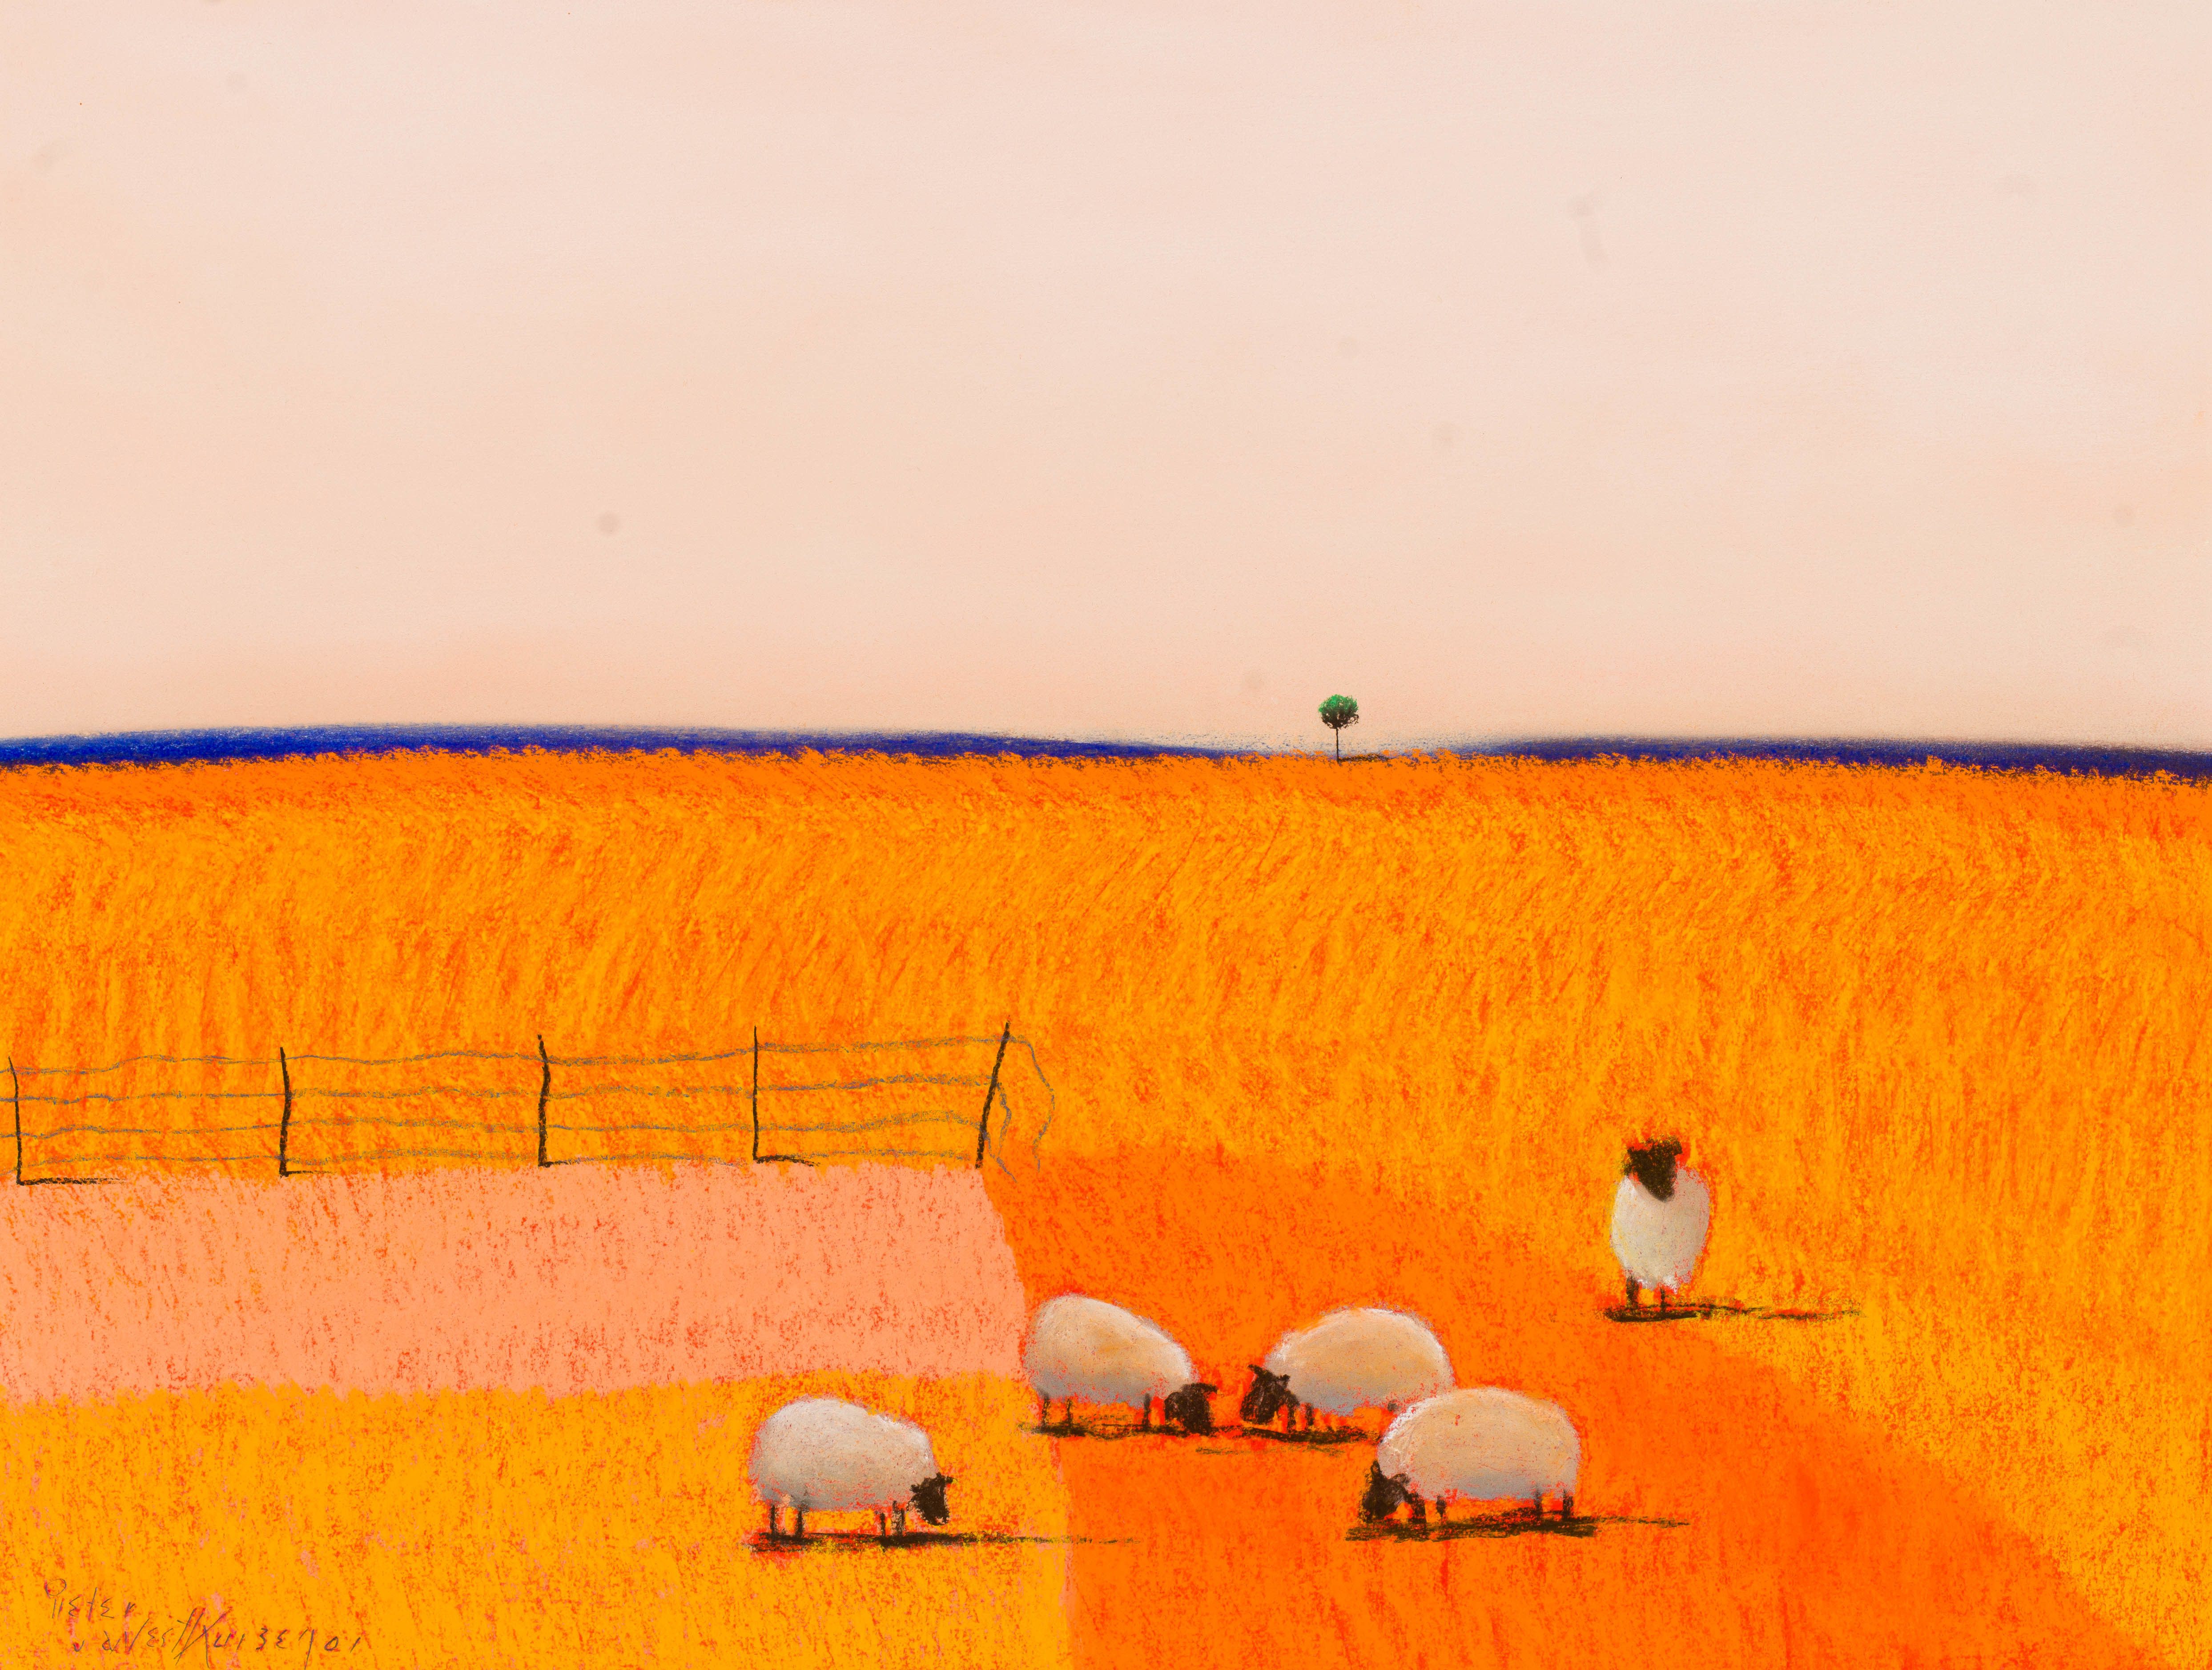 Pieter van der Westhuizen; Sheep in a Field